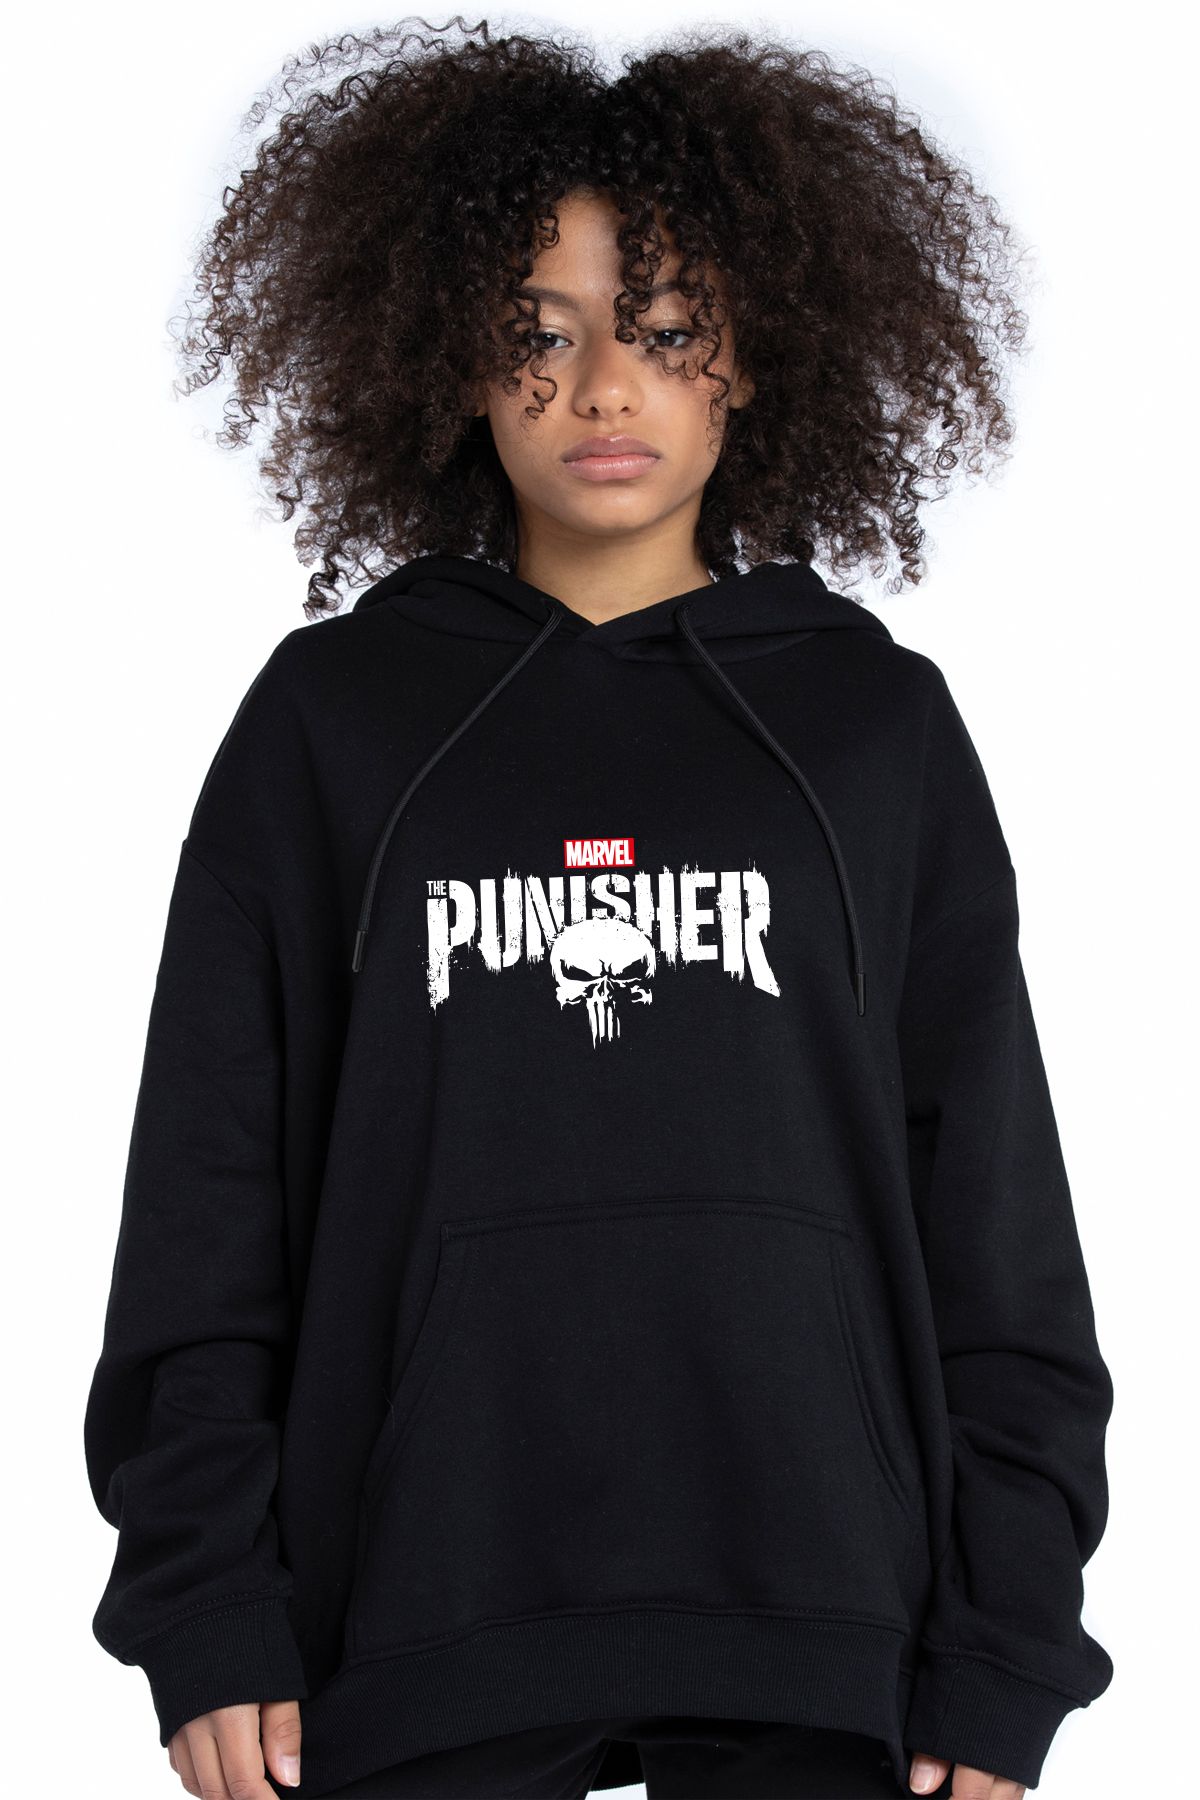 Homamia Baskılı Siyah Sweatshirt Punisher